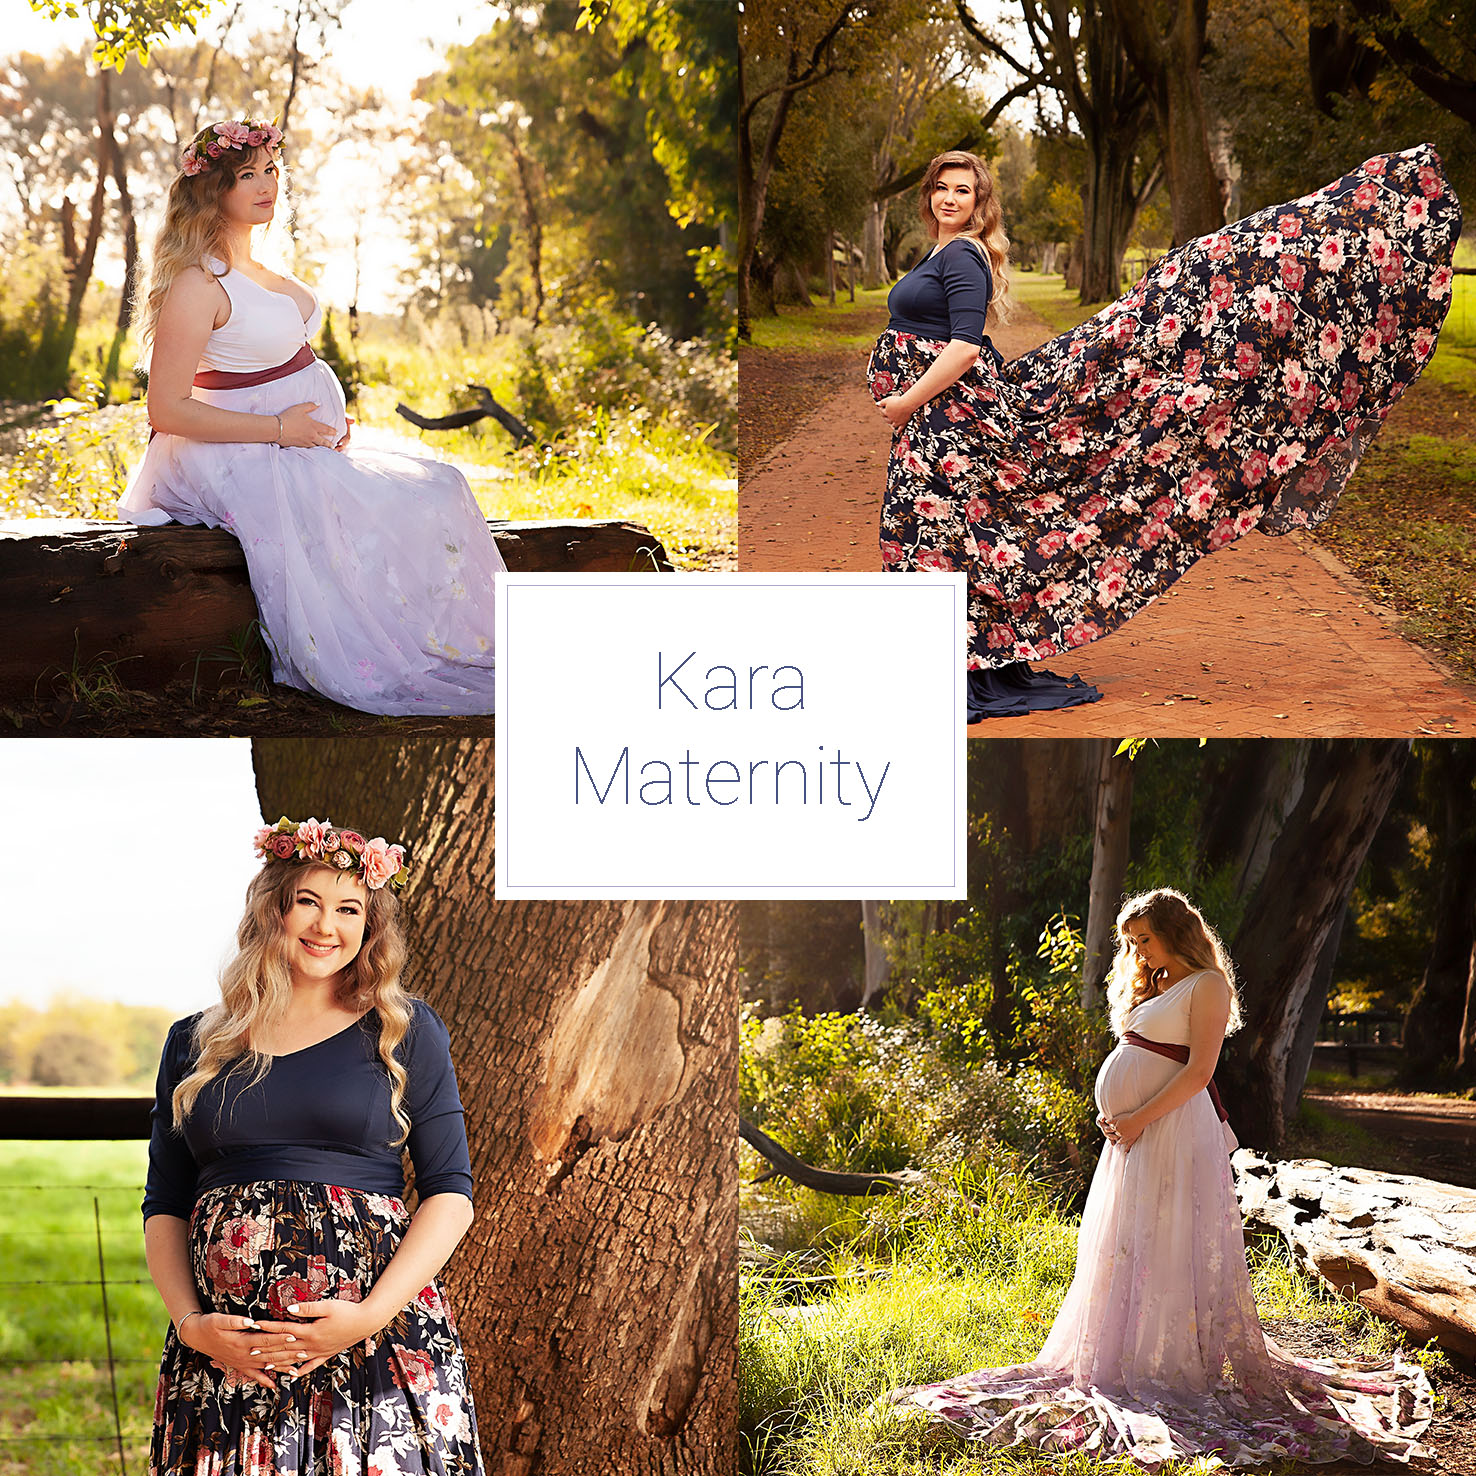 Kara Maternity